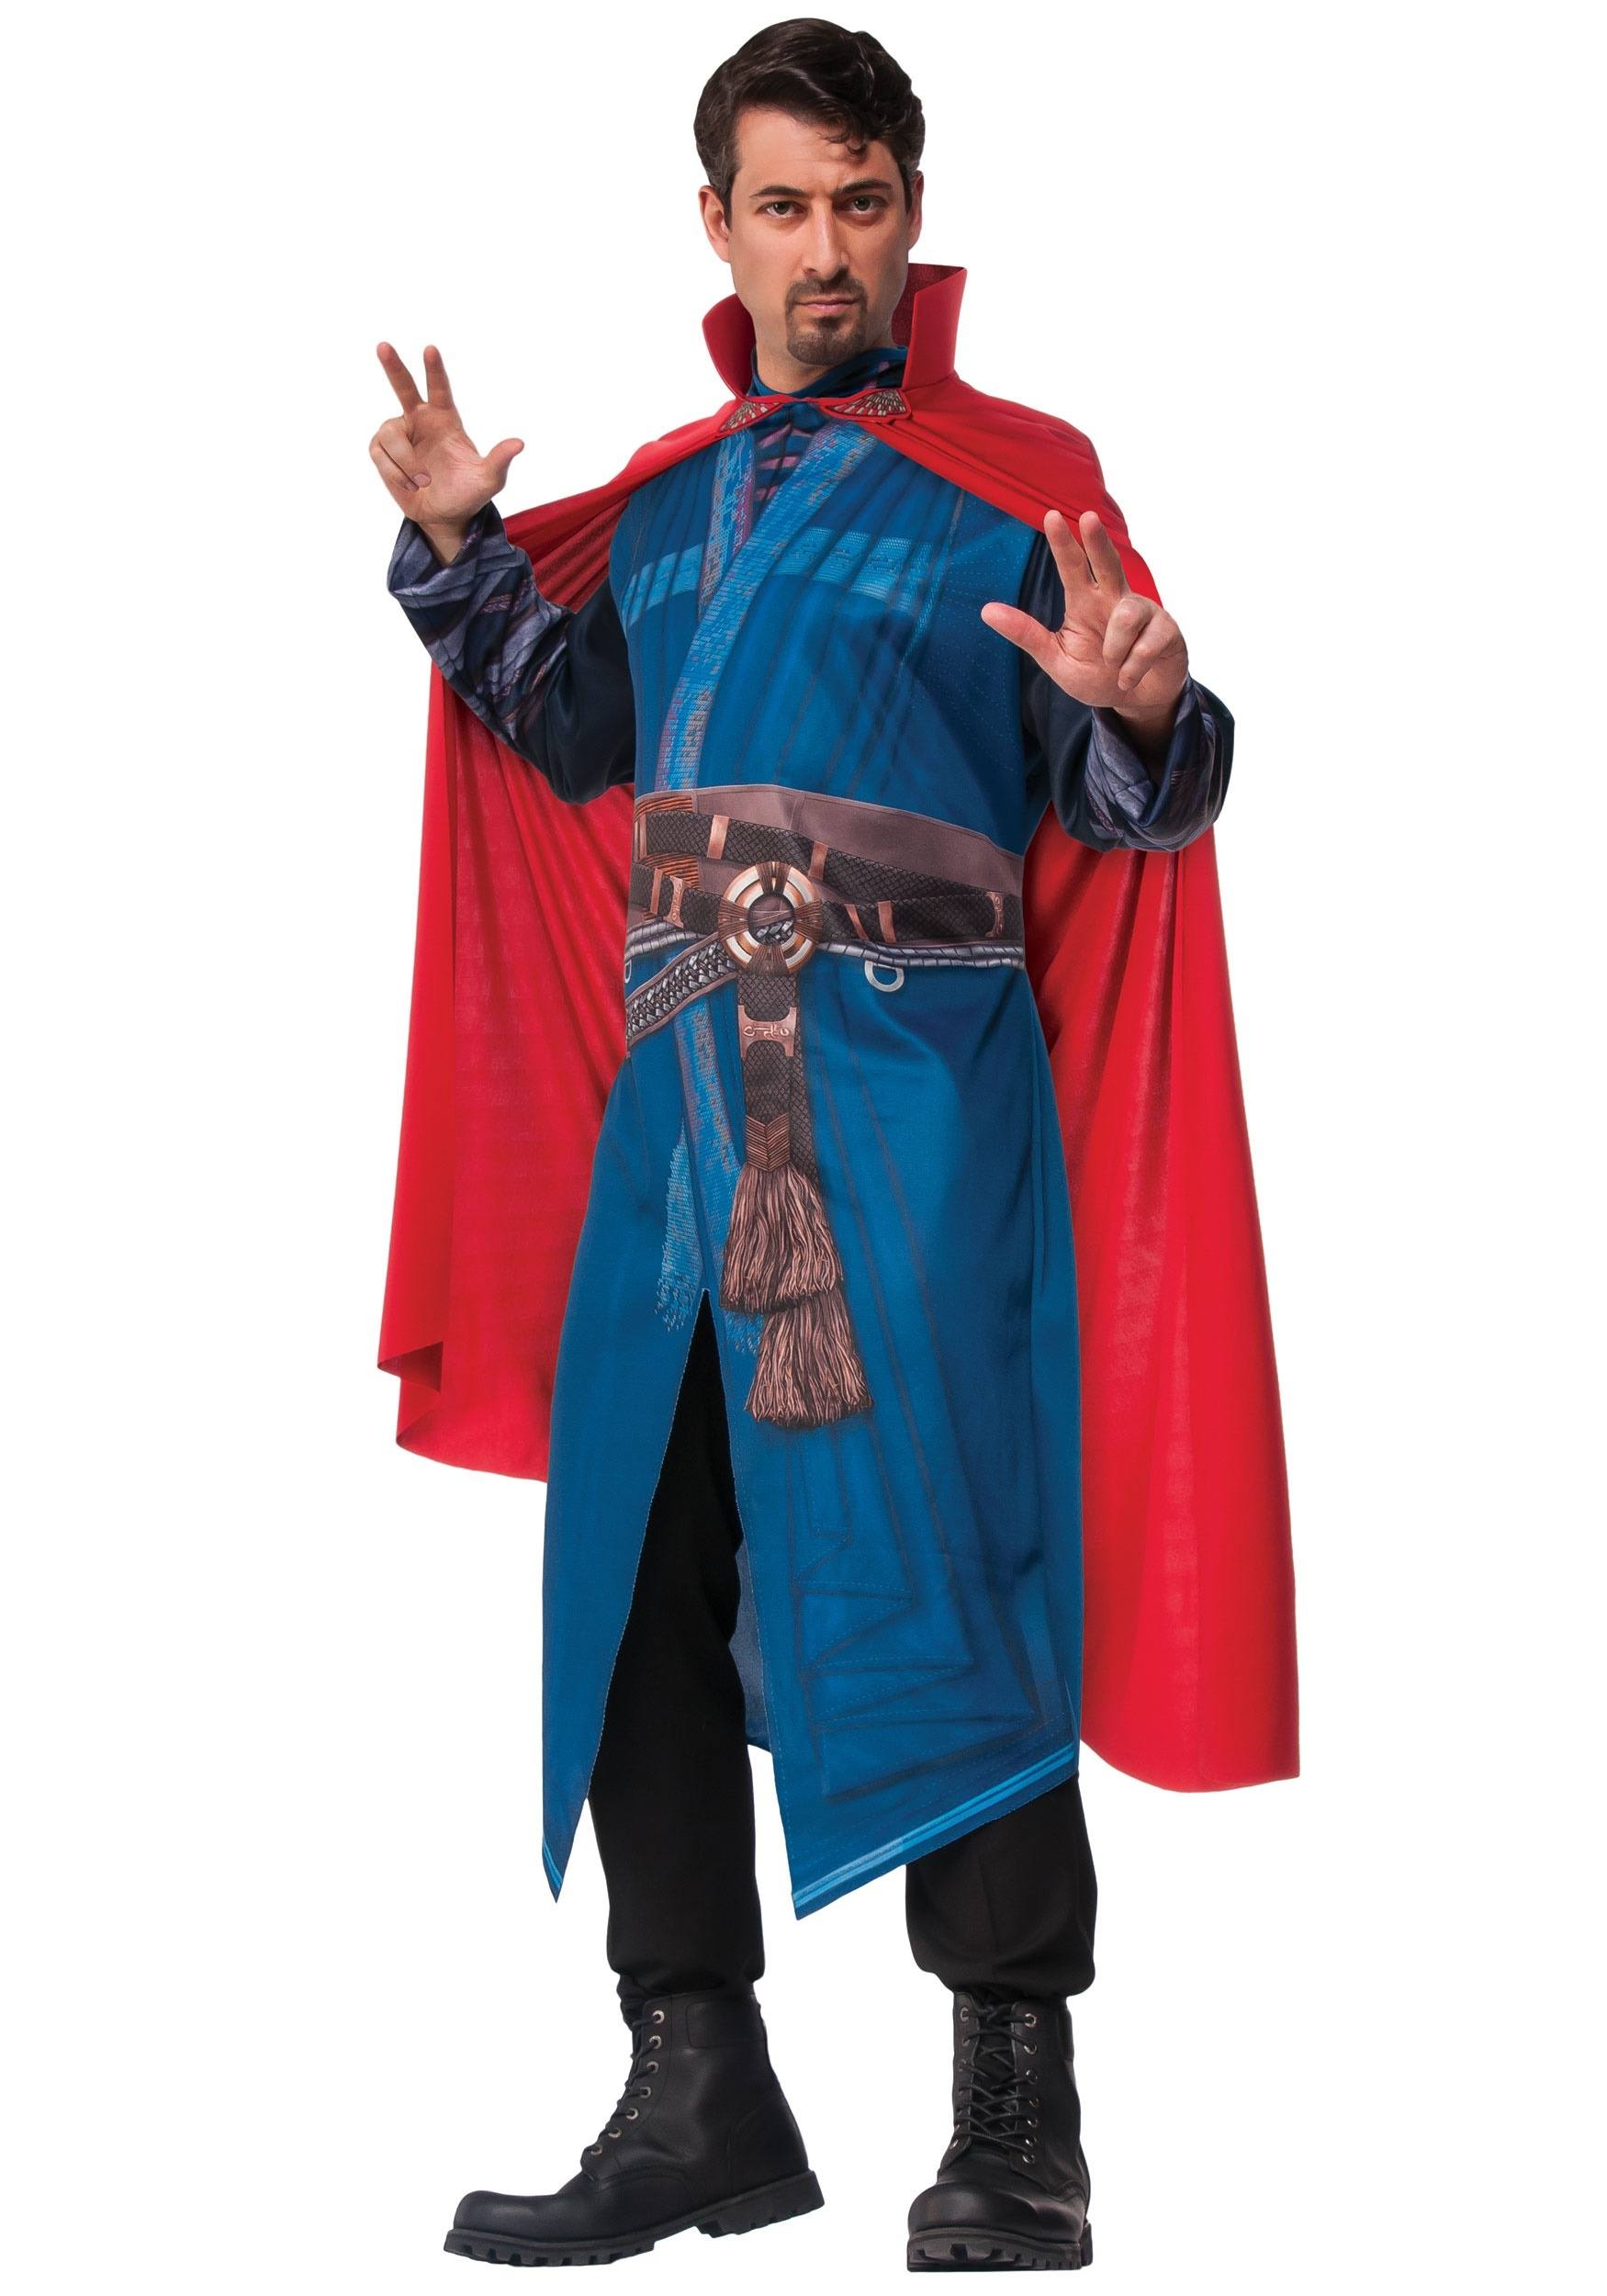 The Dr. Strange Eco-cloak costume.